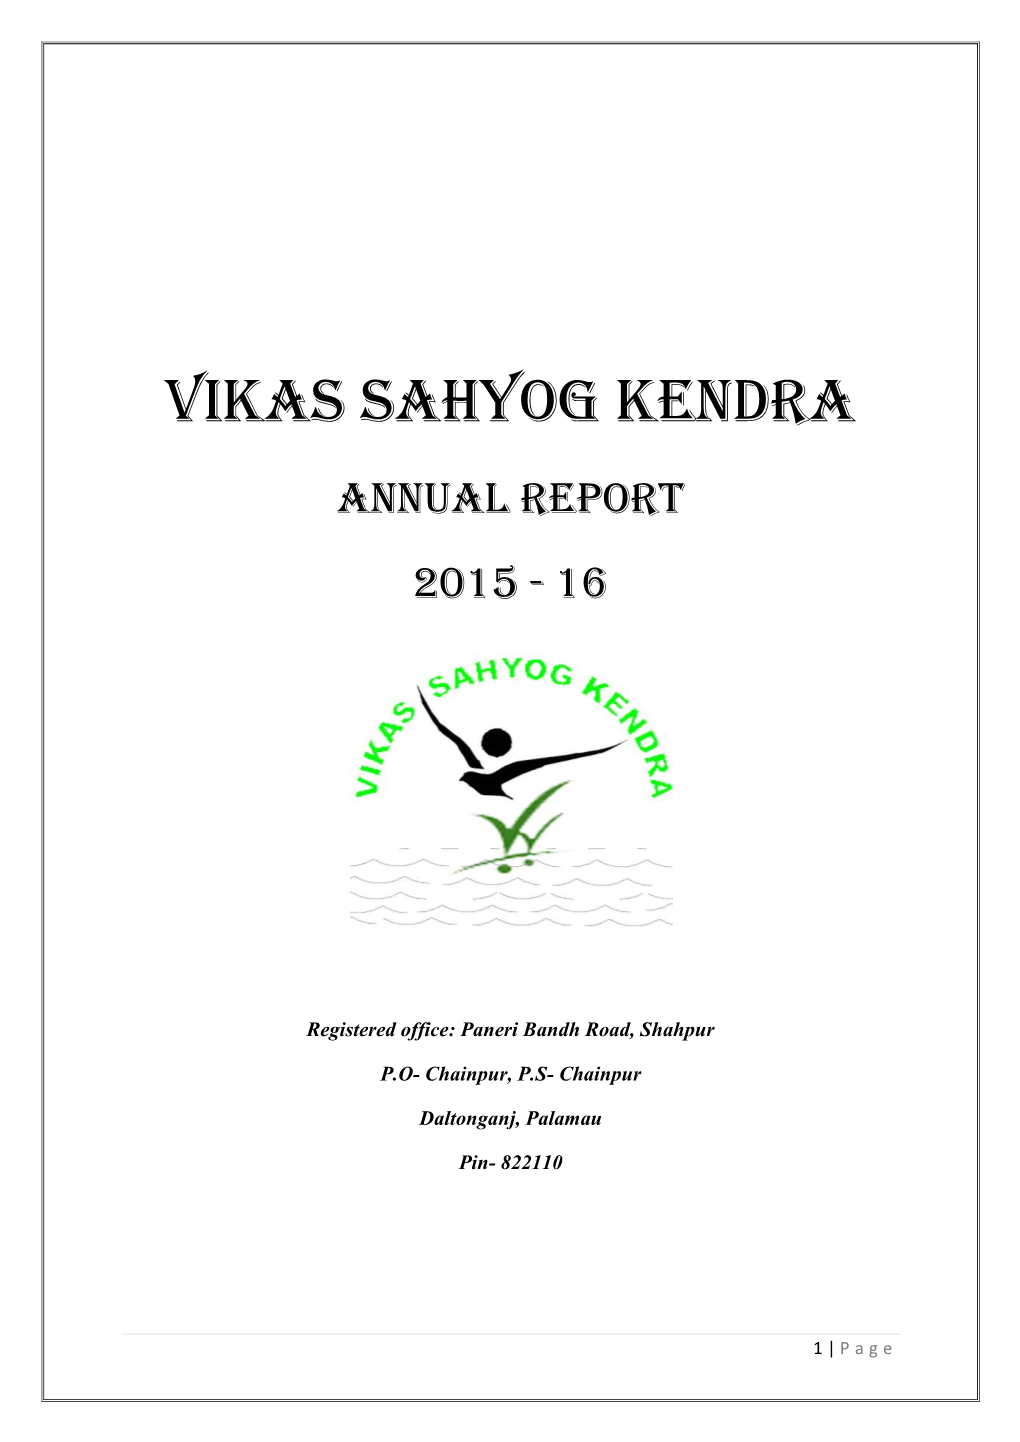 Annual Report 2015 - 16